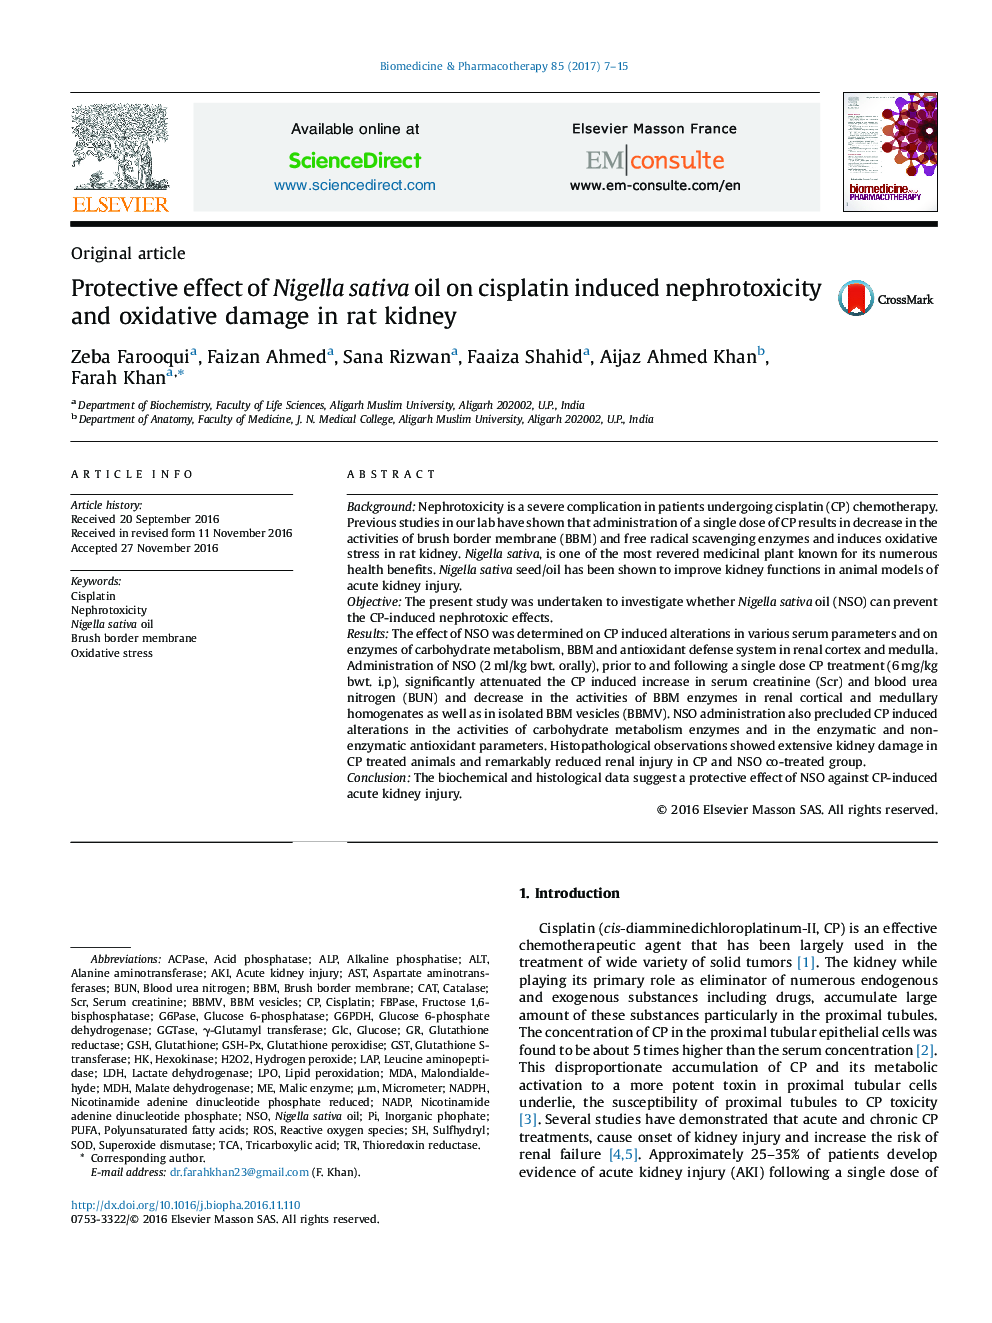 Protective effect of Nigella sativa oil on cisplatin induced nephrotoxicity and oxidative damage in rat kidney